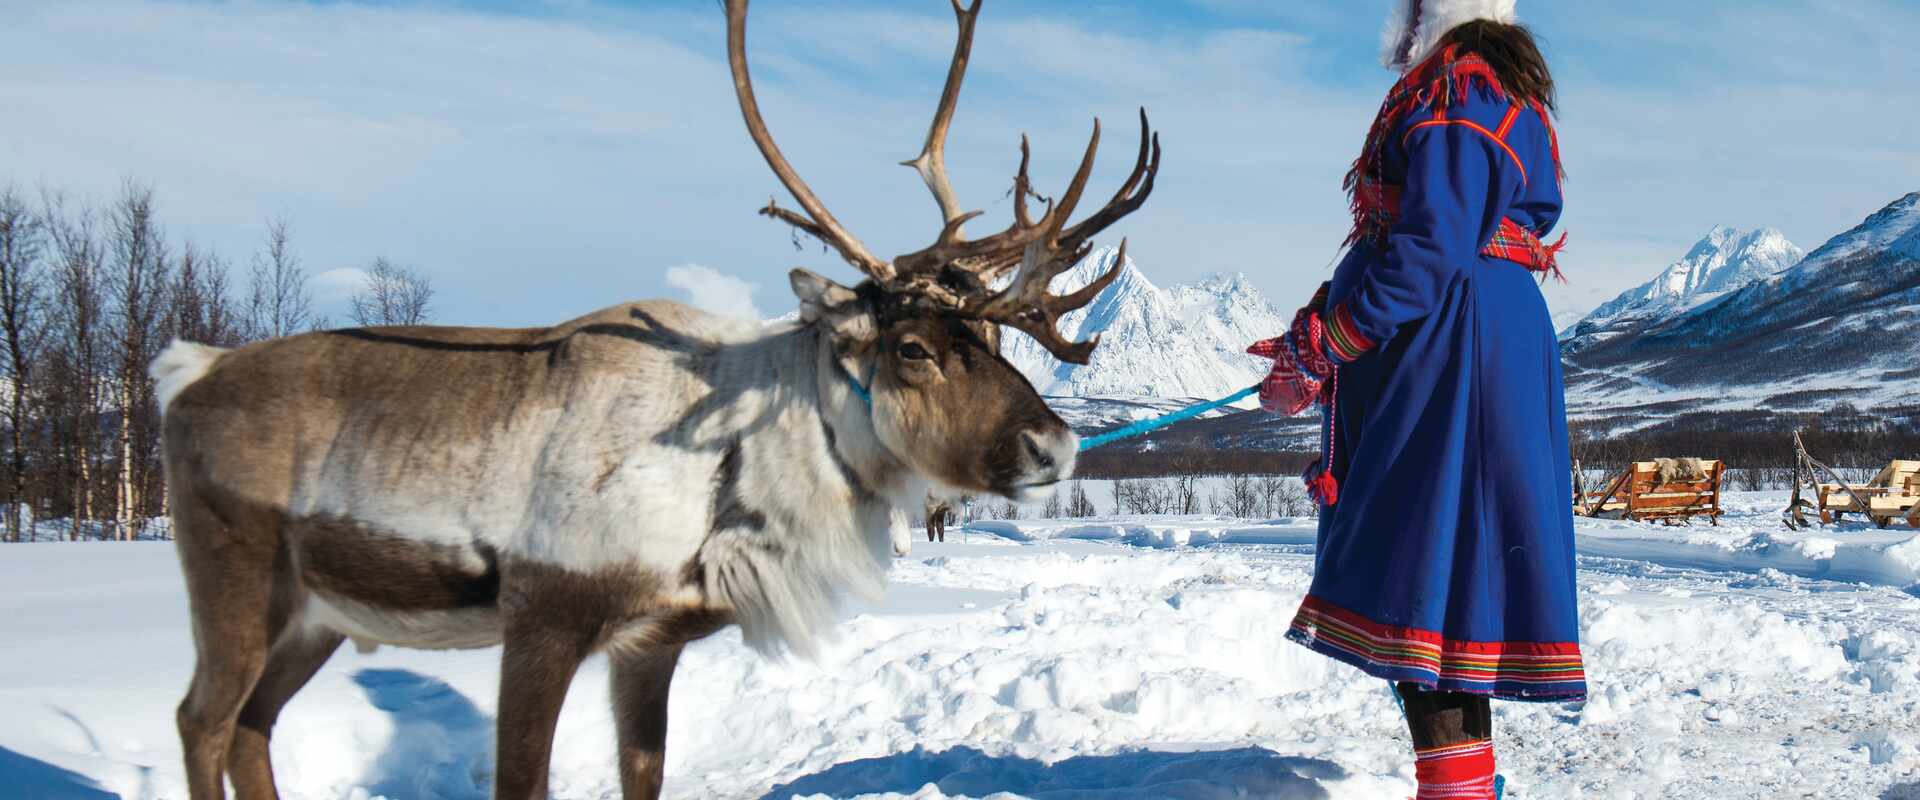 Sami Woman with Reindeer, Lapland Norway